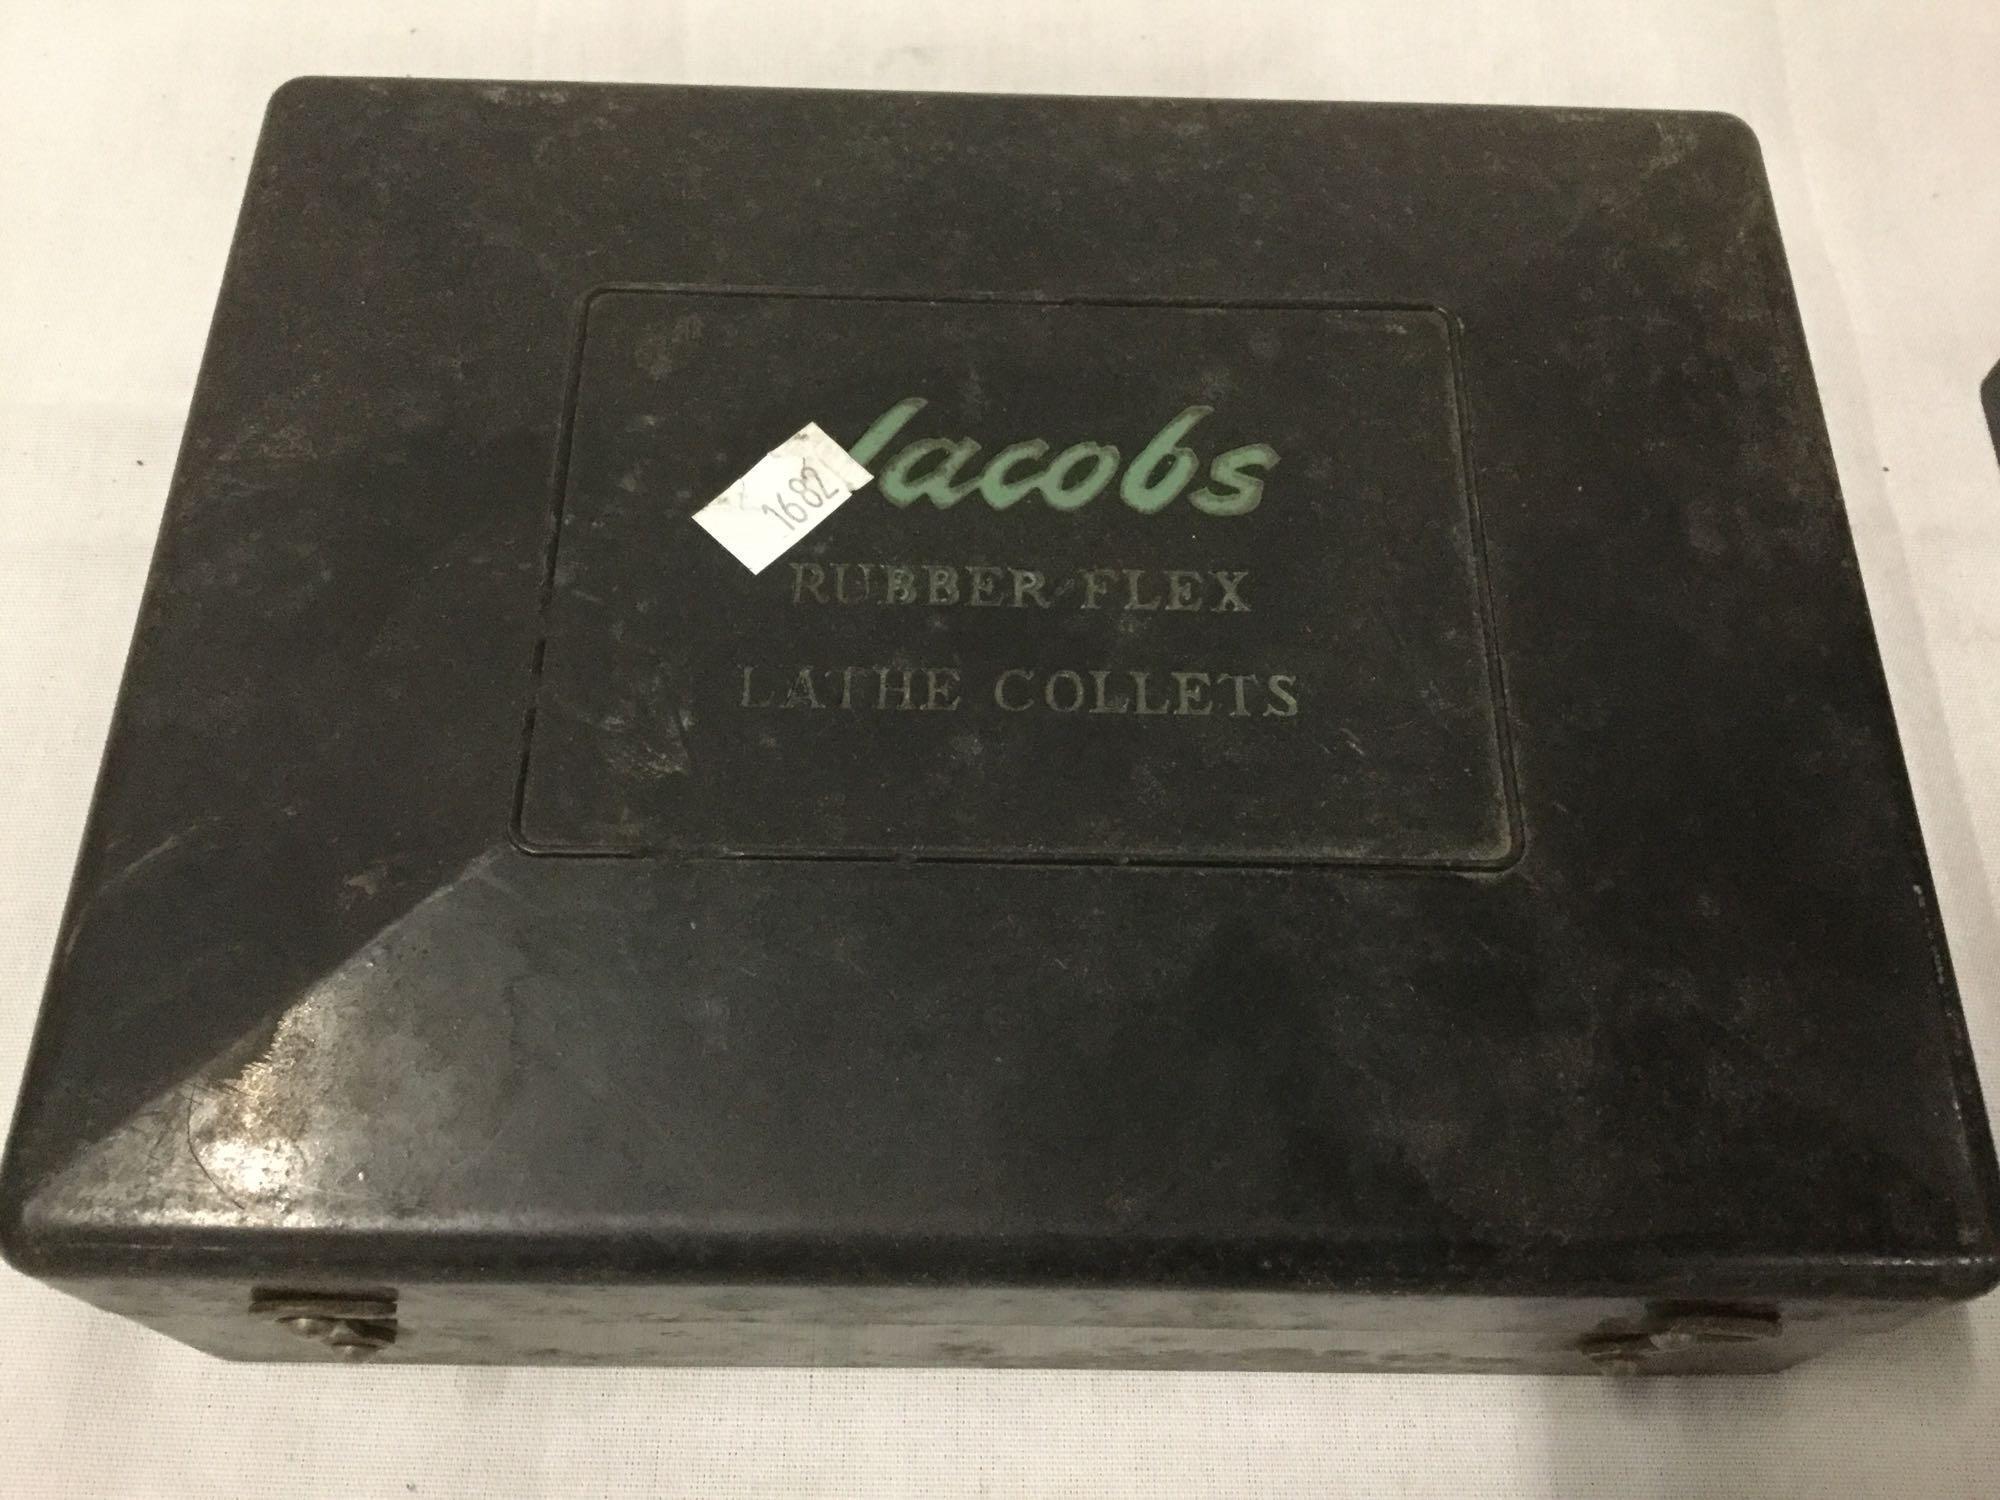 Lot of 2 sets of vintage Jacobs Rubber Flex Lathe Collets kits